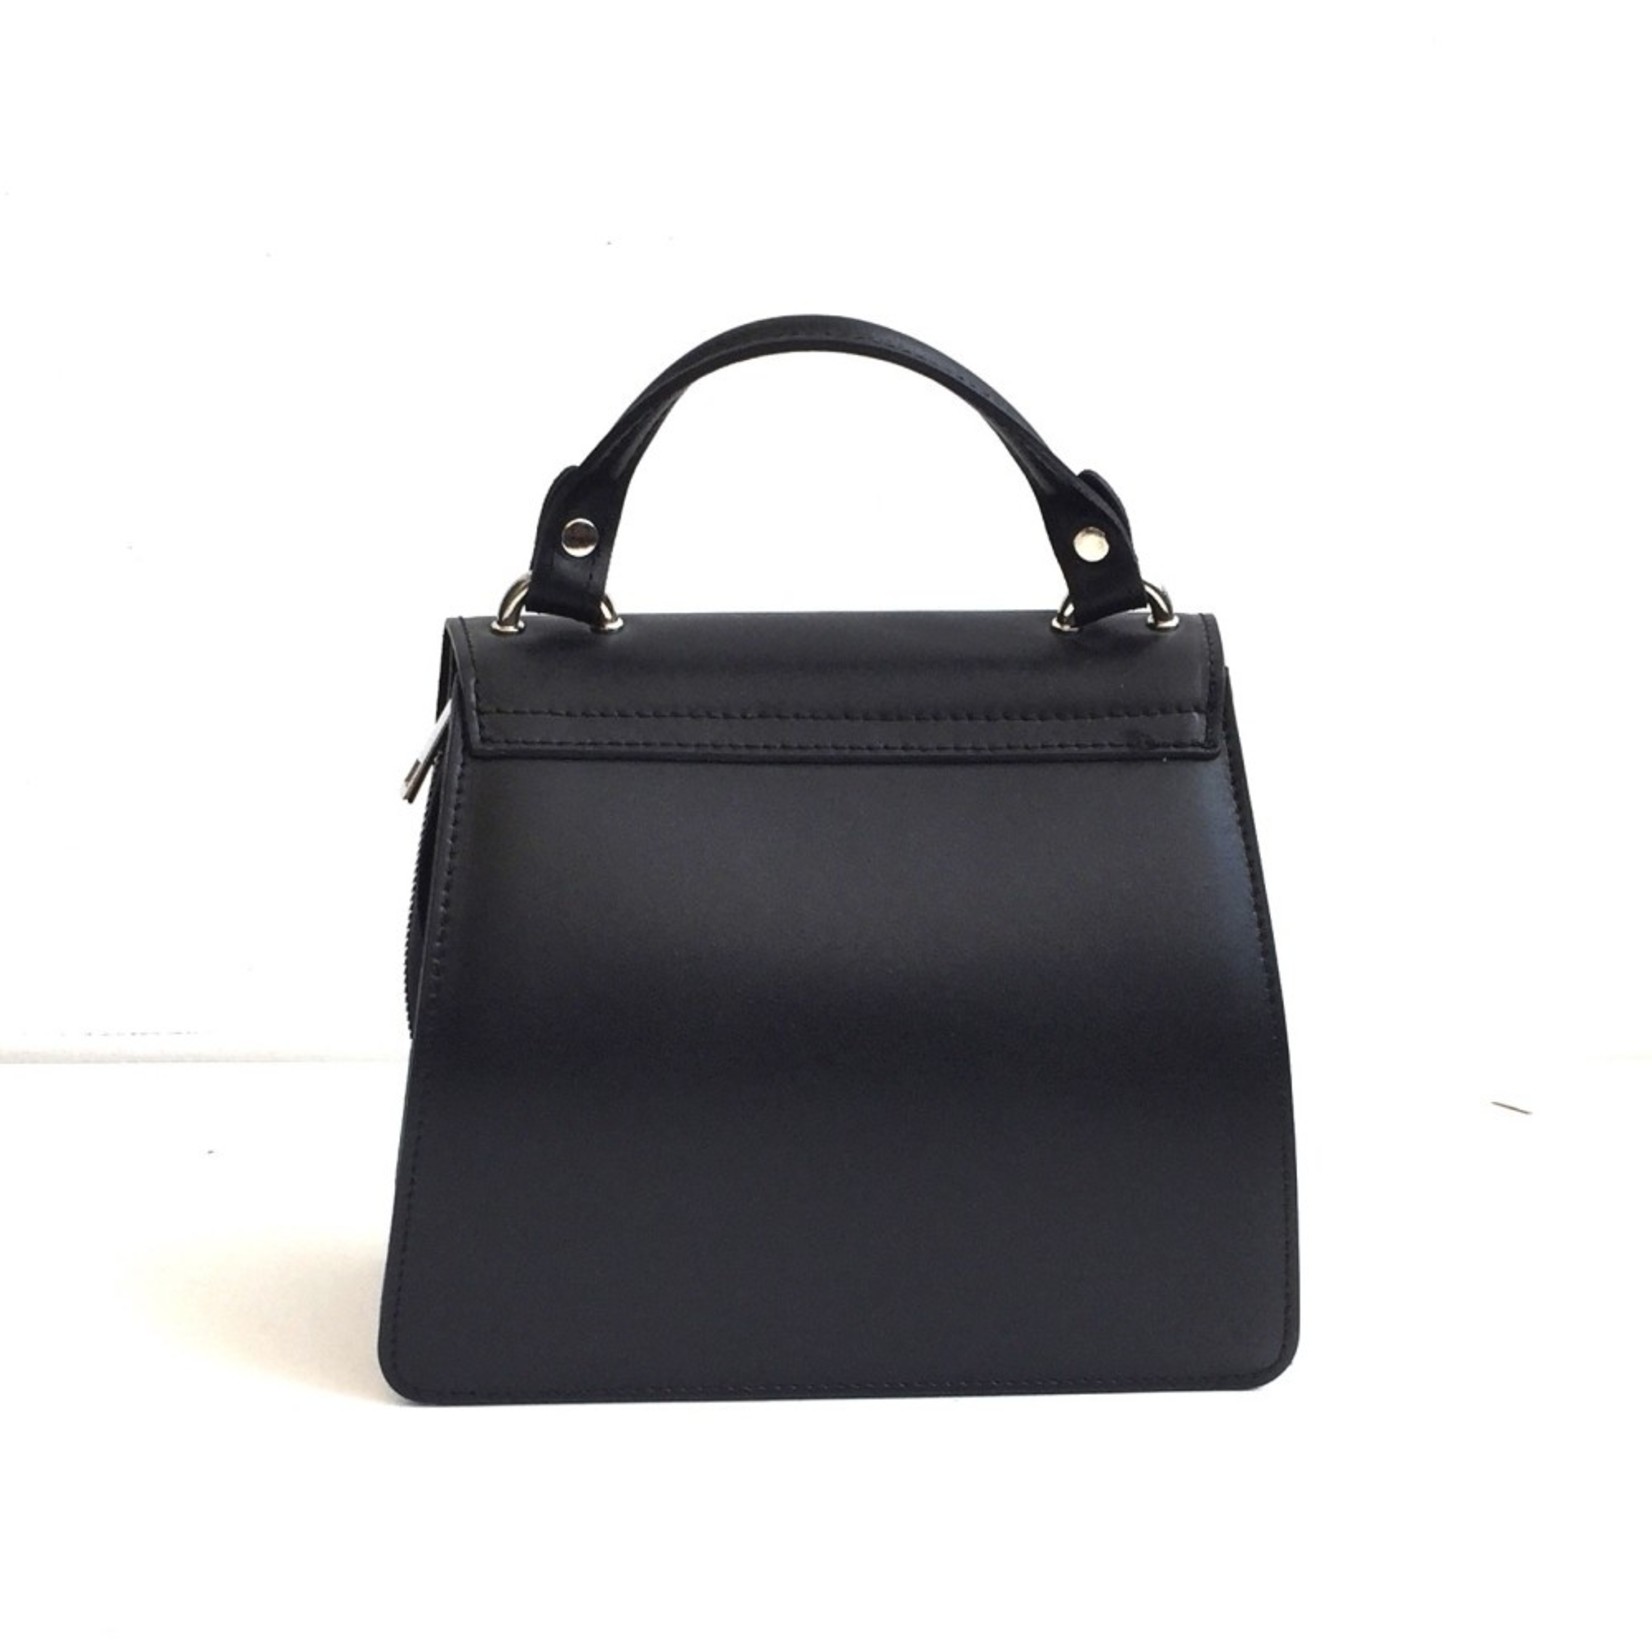 Eve's Gifts Leather handbag Black